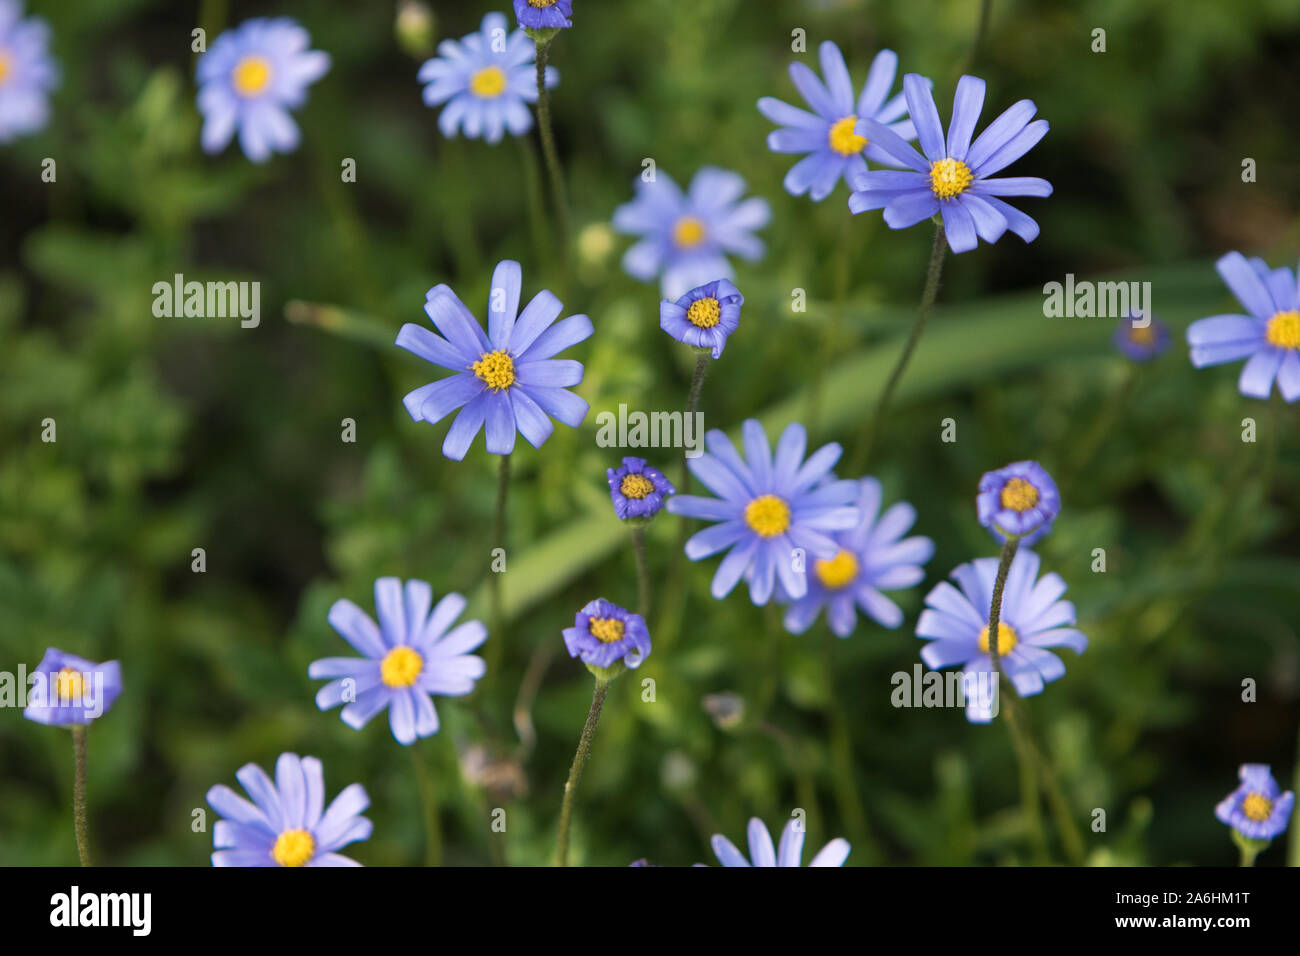 Blue flowers of Felicia Stock Photo